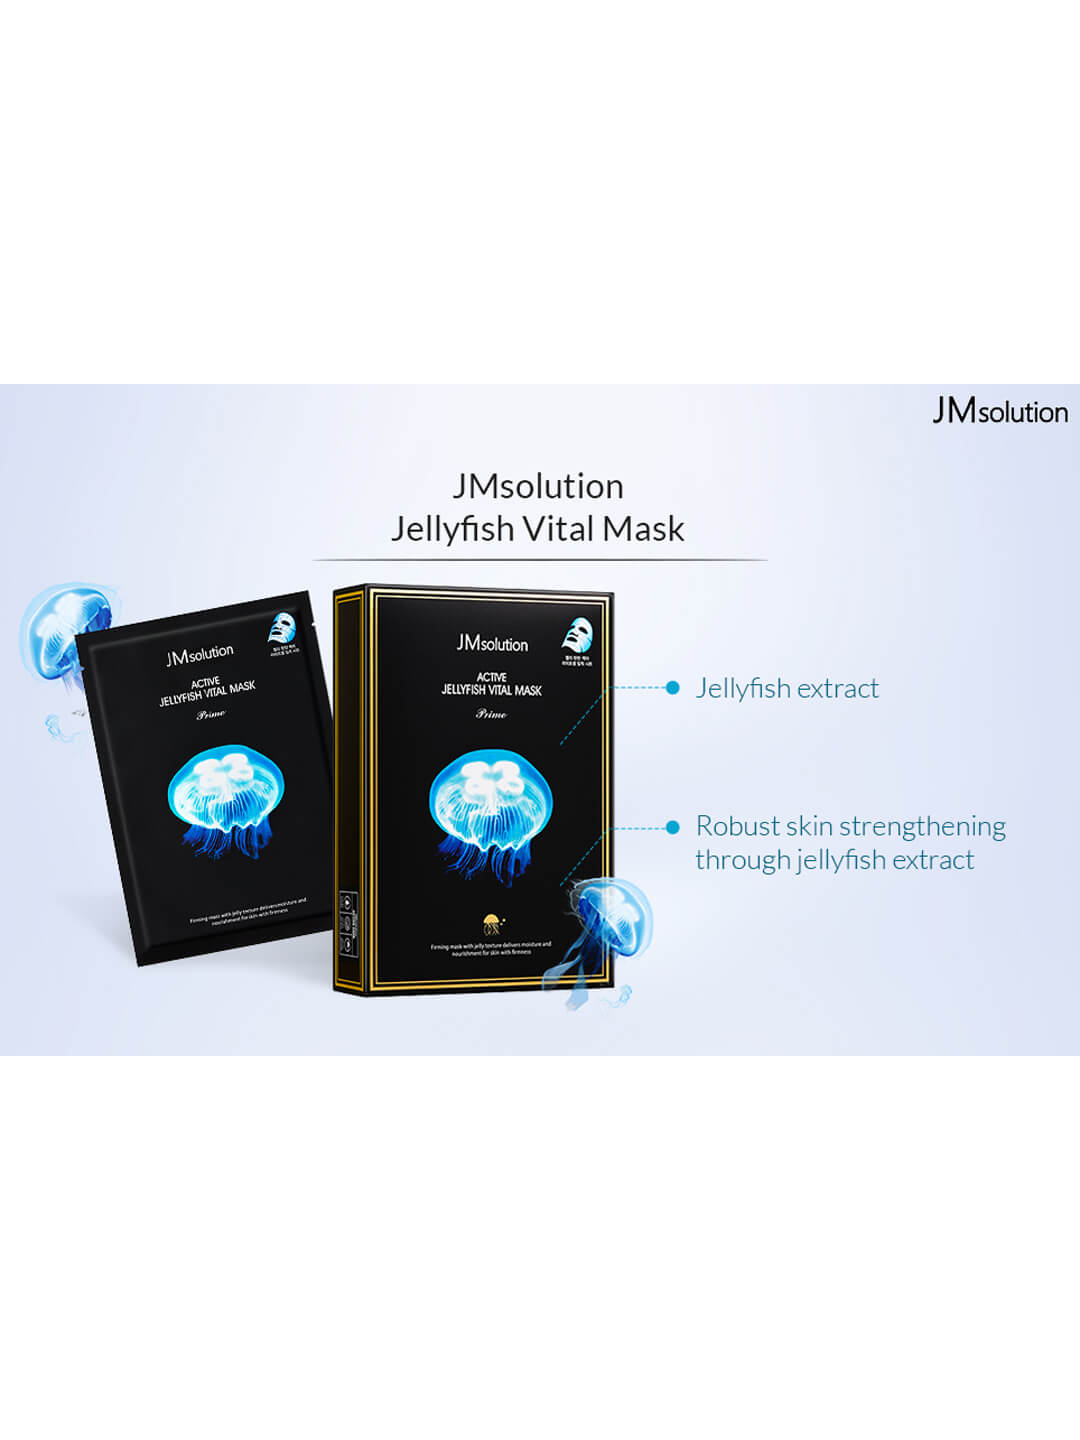 1666175310_jellyfish-vital-mask-2-2-1